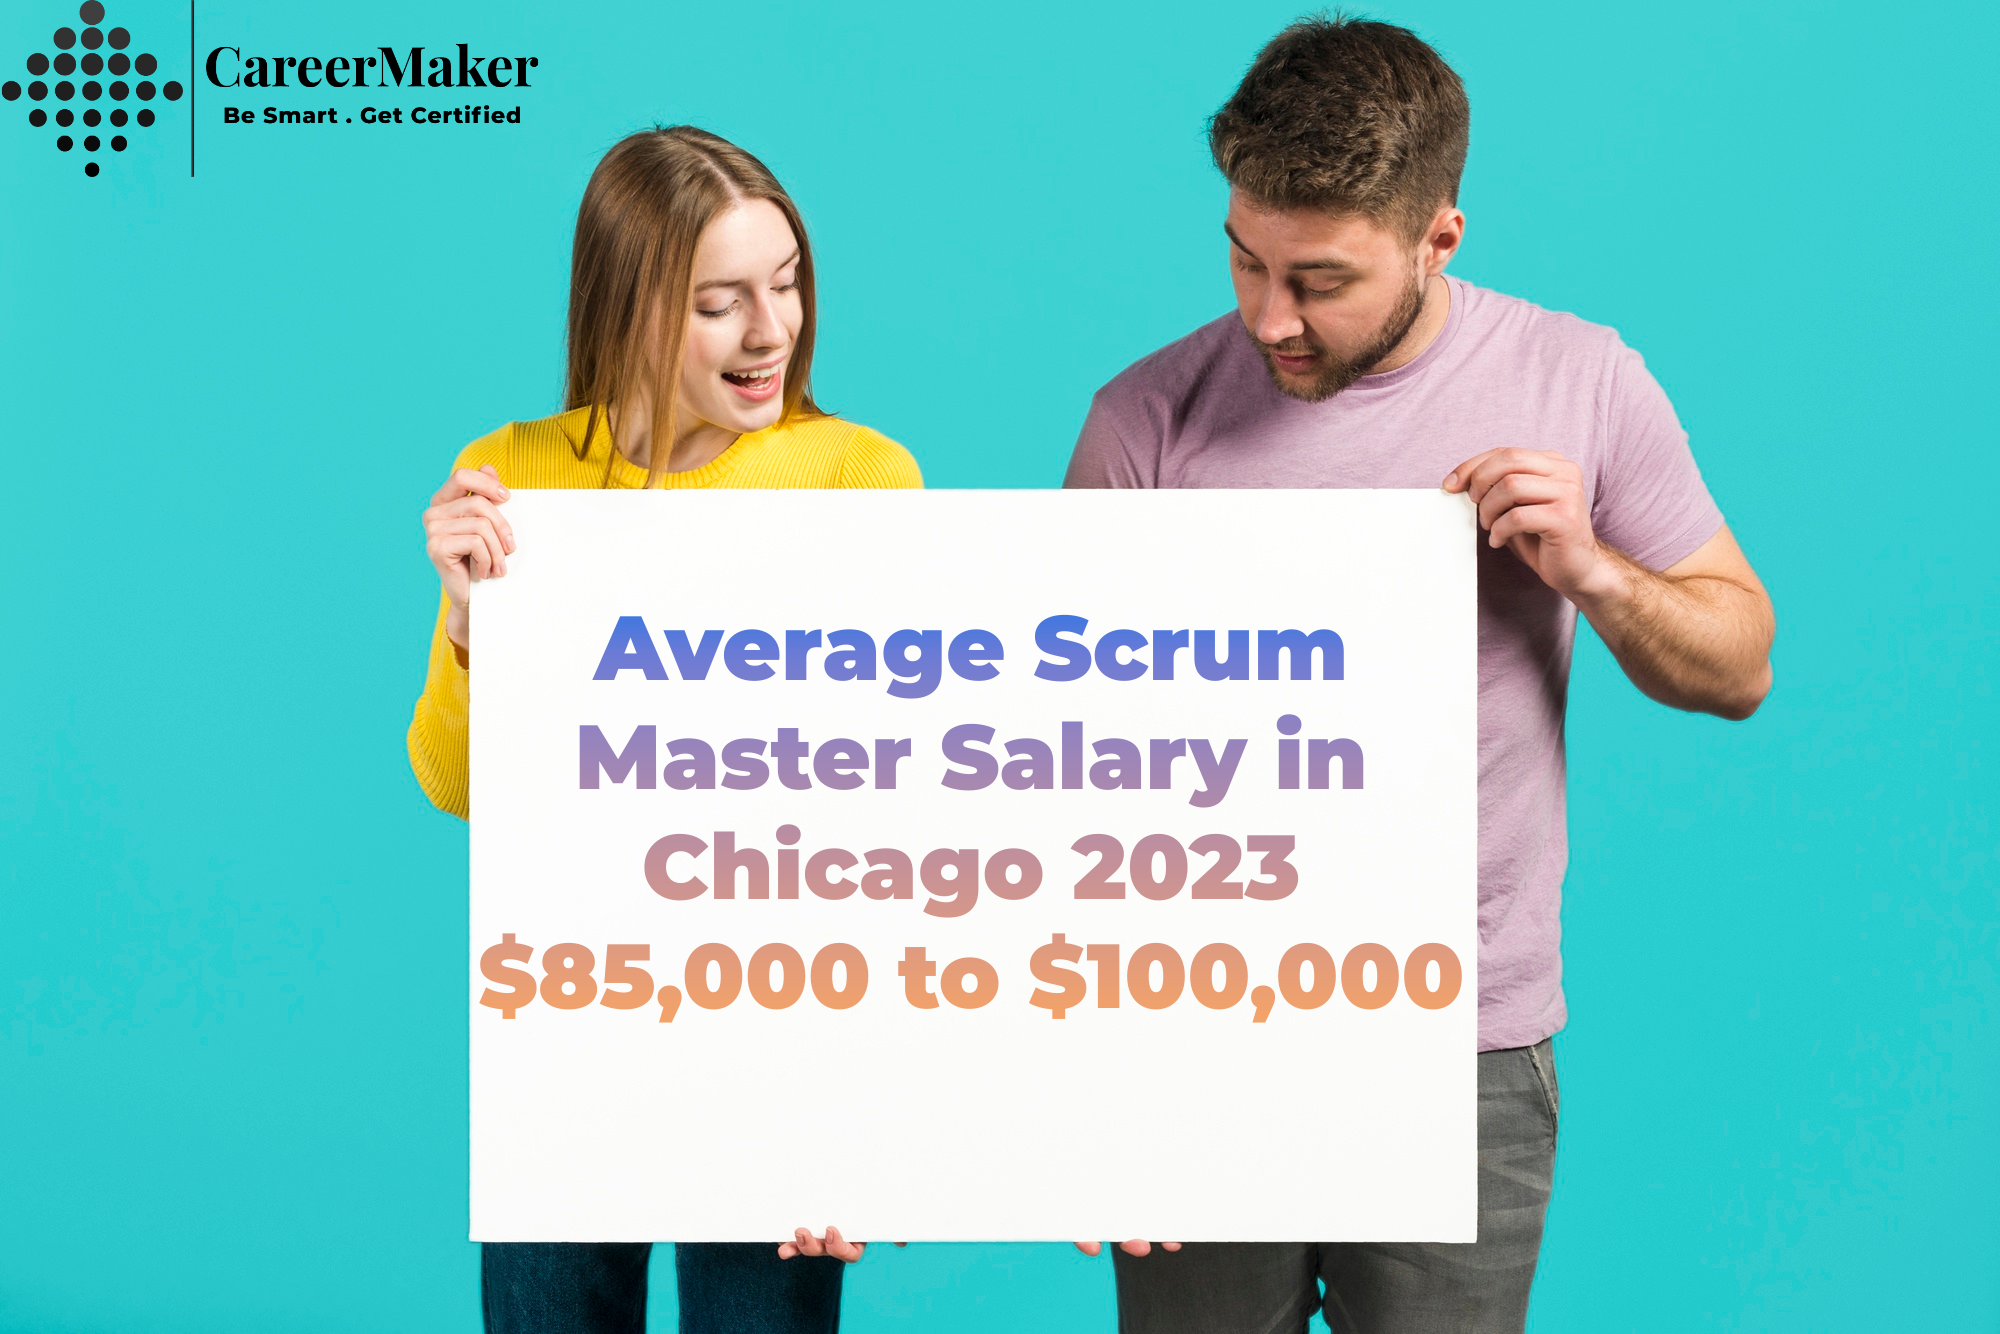 Average Scrum Master Salary in Chicago 2023